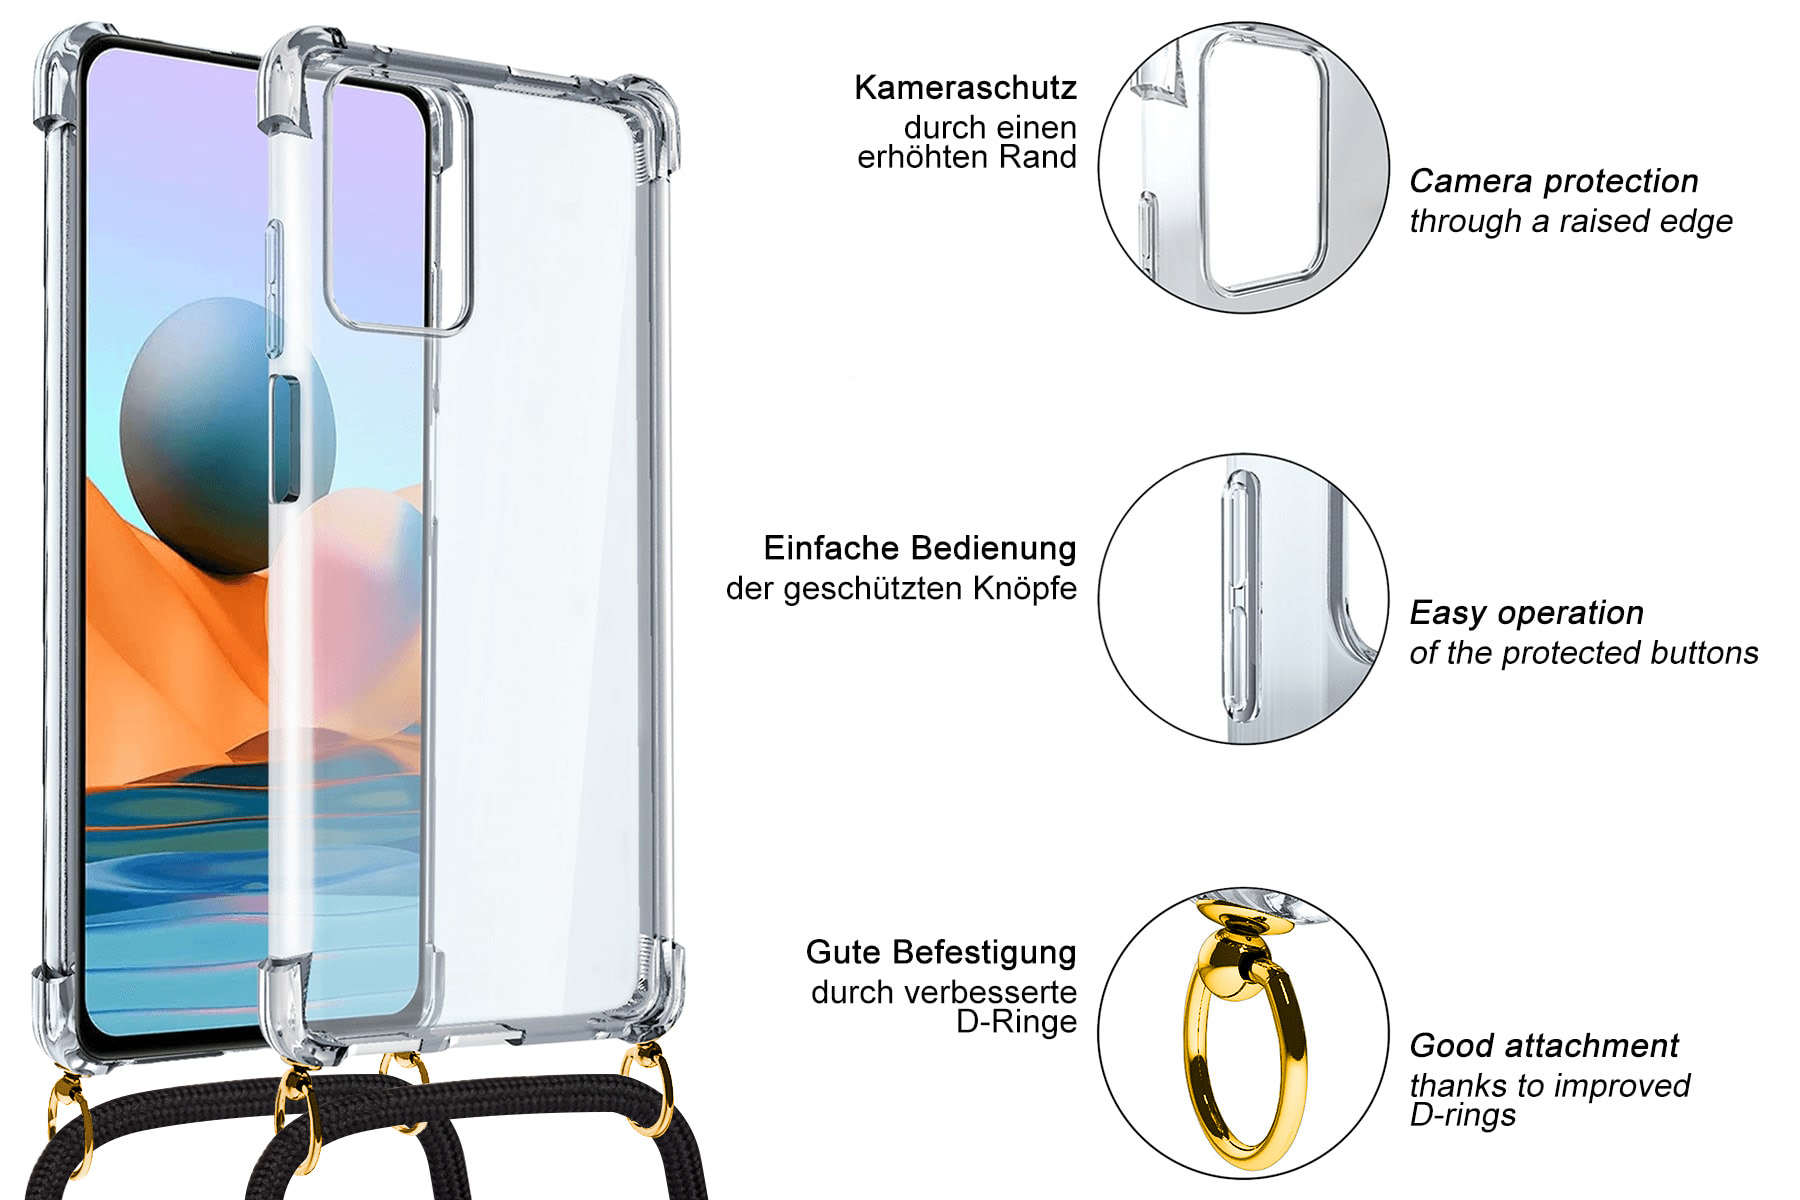 MTB MORE Kordel, 14 Backcover, Apple, Silber-Grau gold Pro Max, iPhone mit Umhänge-Hülle / ENERGY